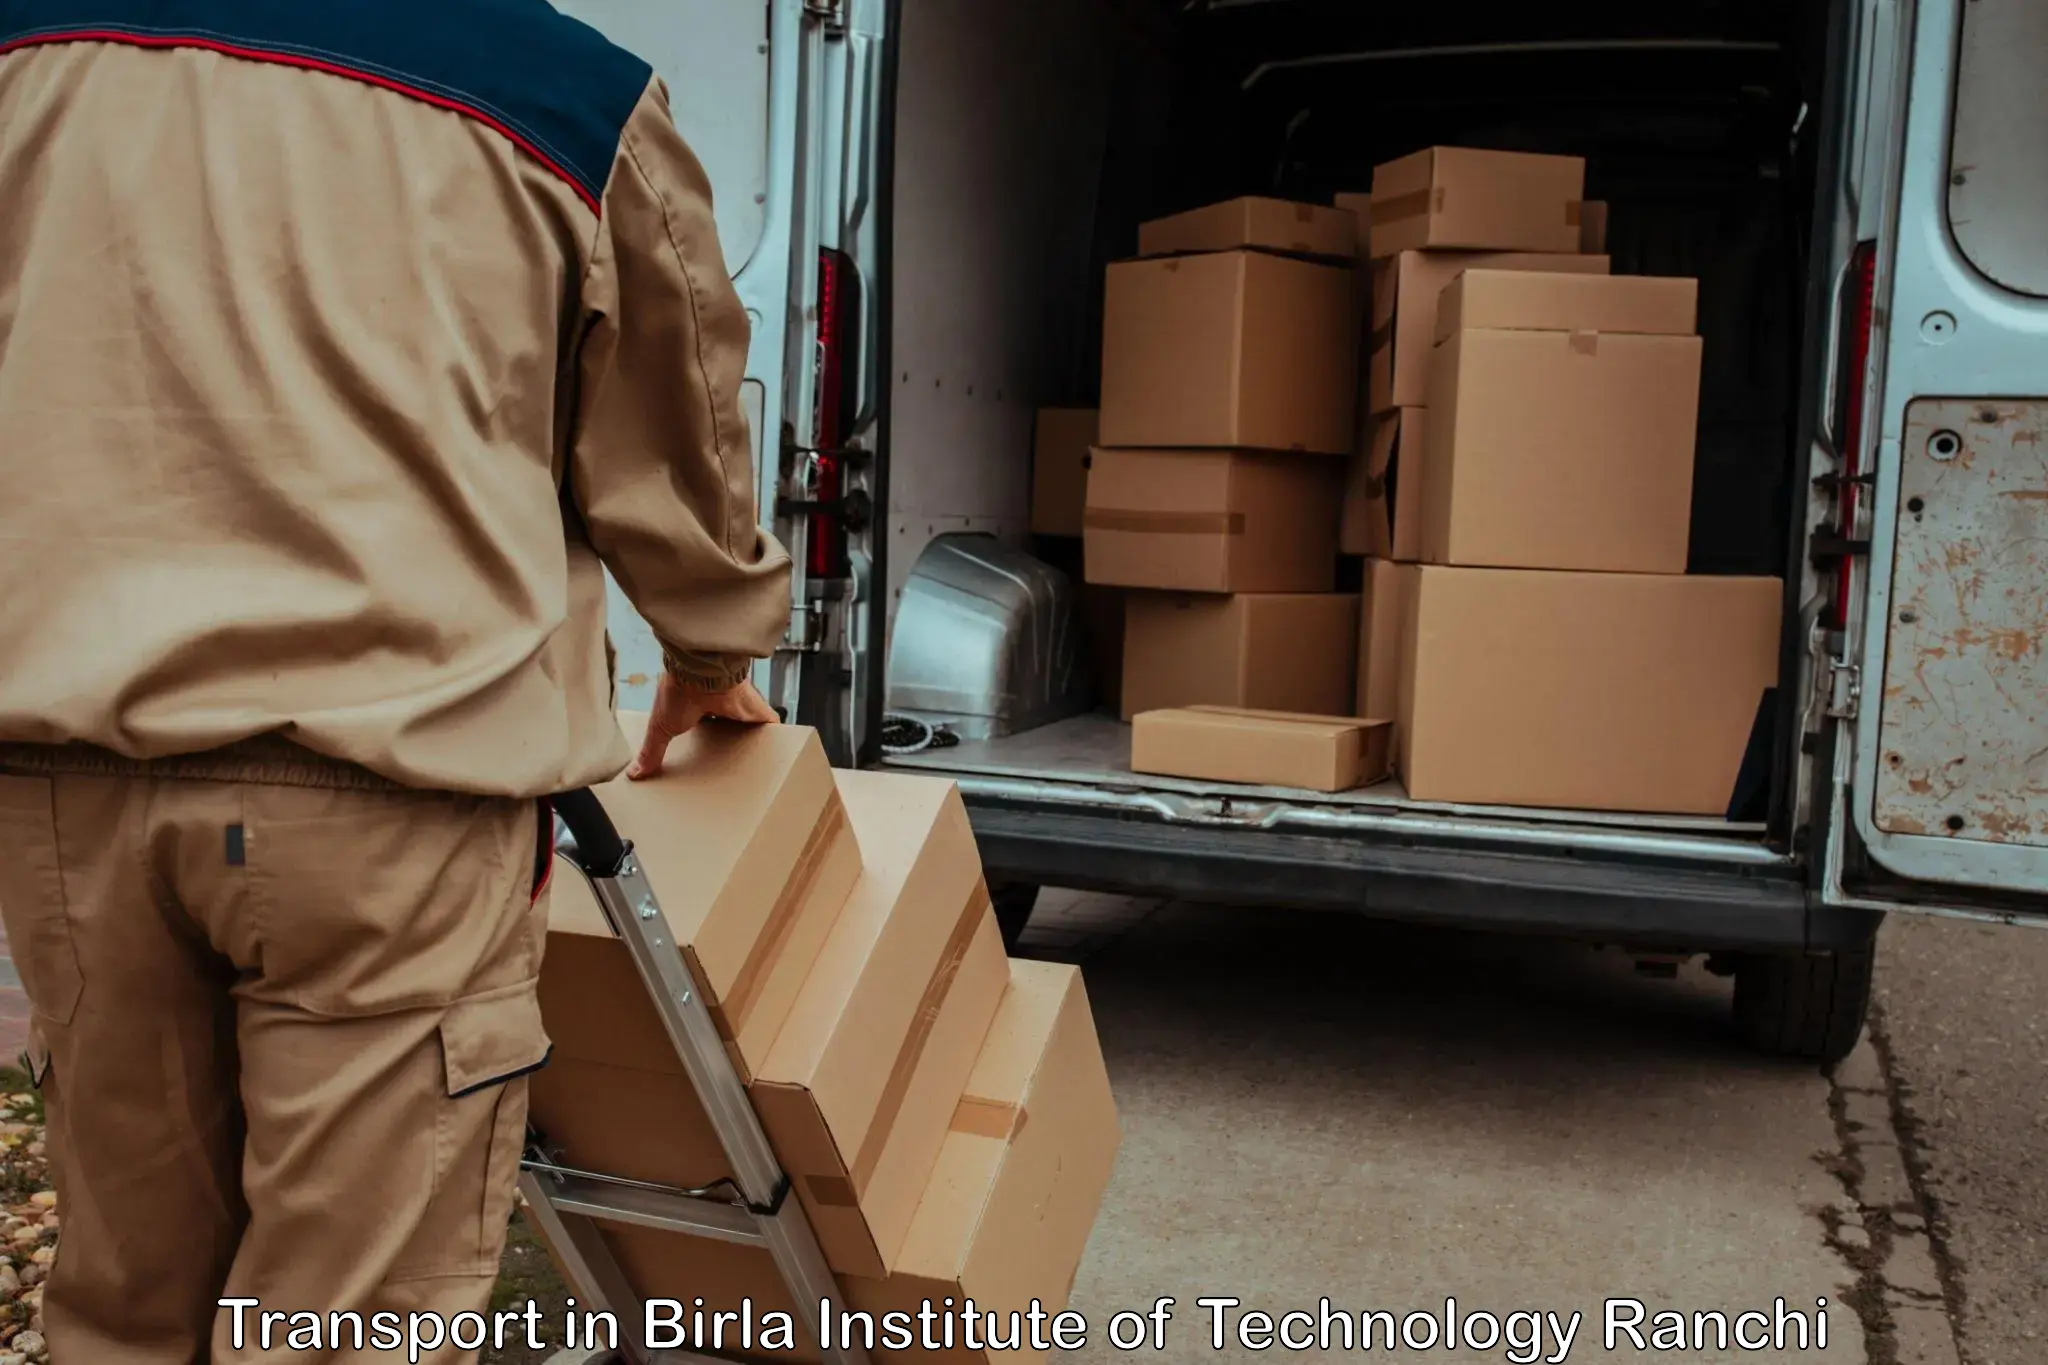 Furniture transport service in Birla Institute of Technology Ranchi